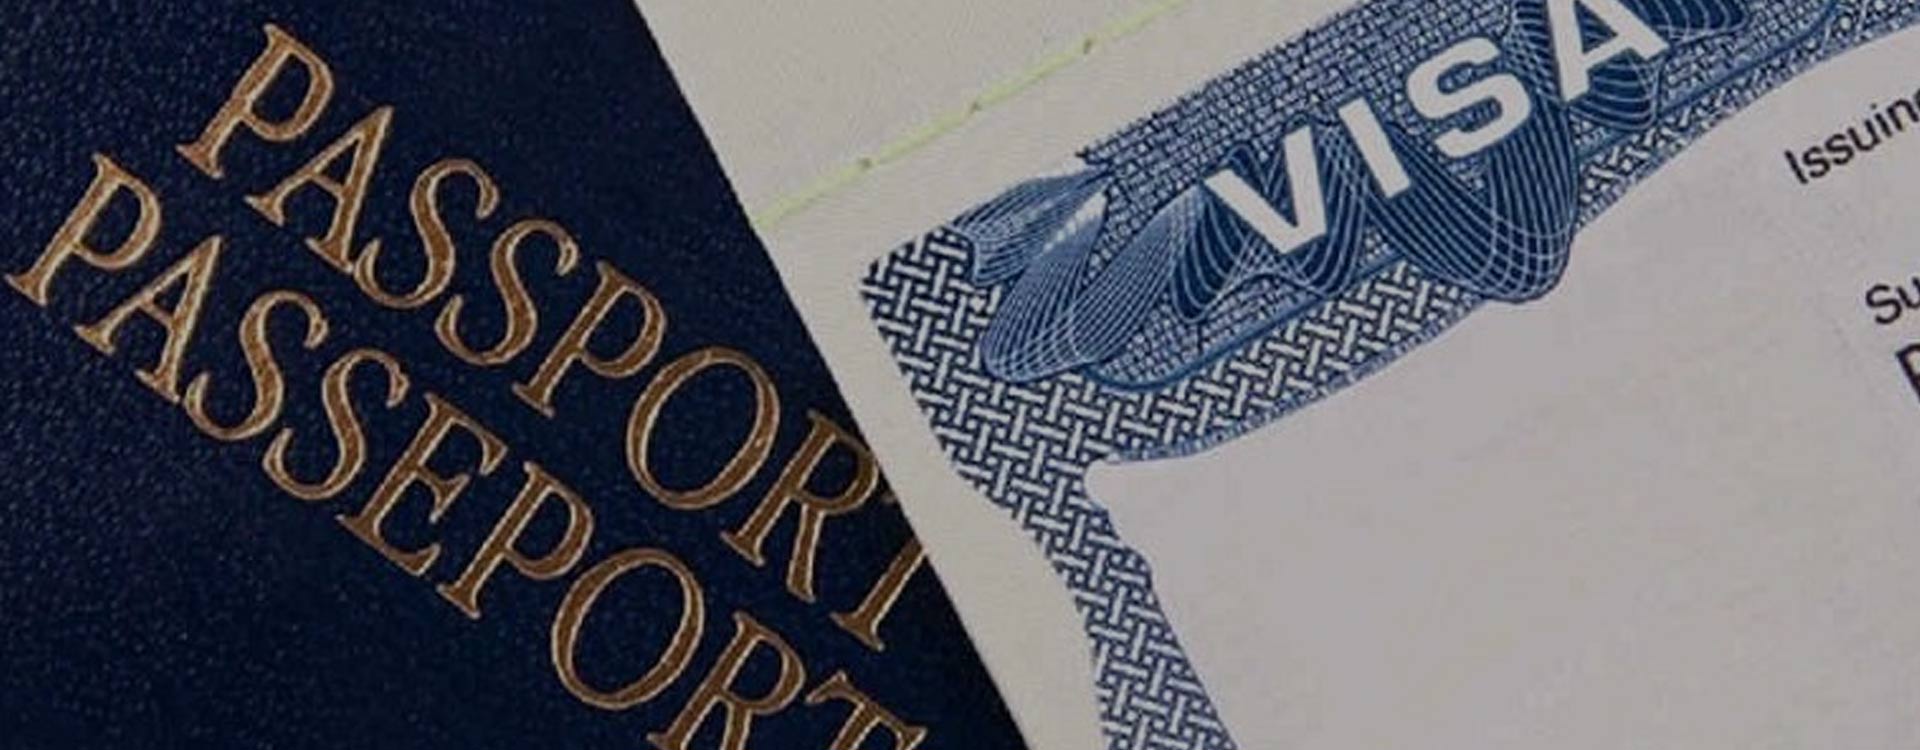 Uzbekistan Visa Processing Time